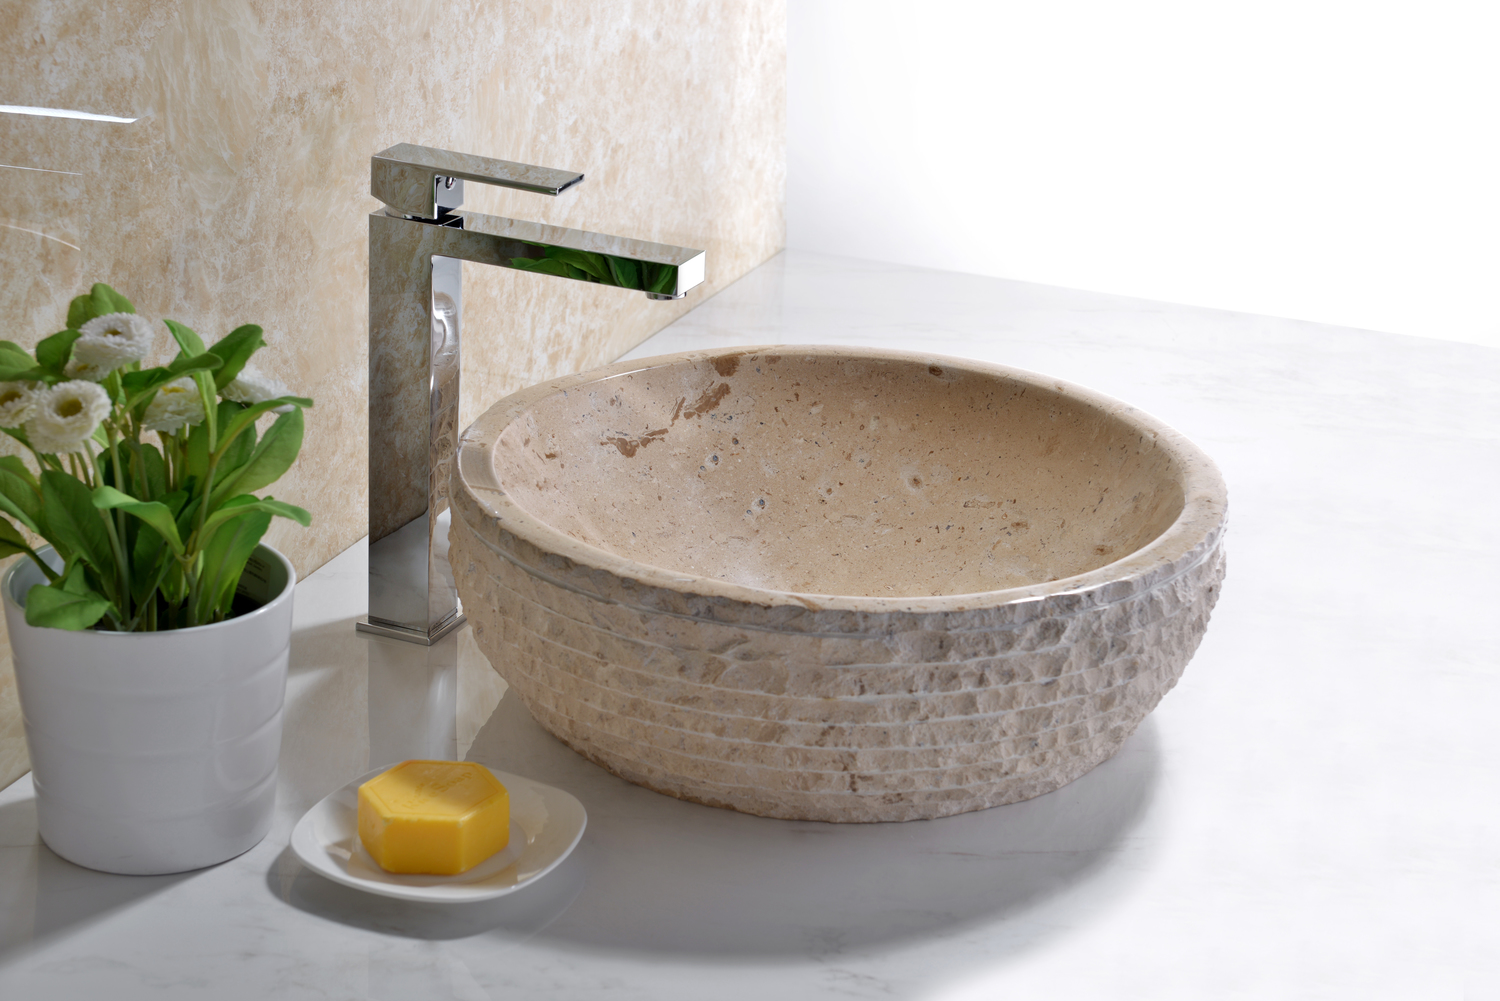 white floating sink Anzzi BATHROOM - Sinks - Vessel - Exotic Stone Cream